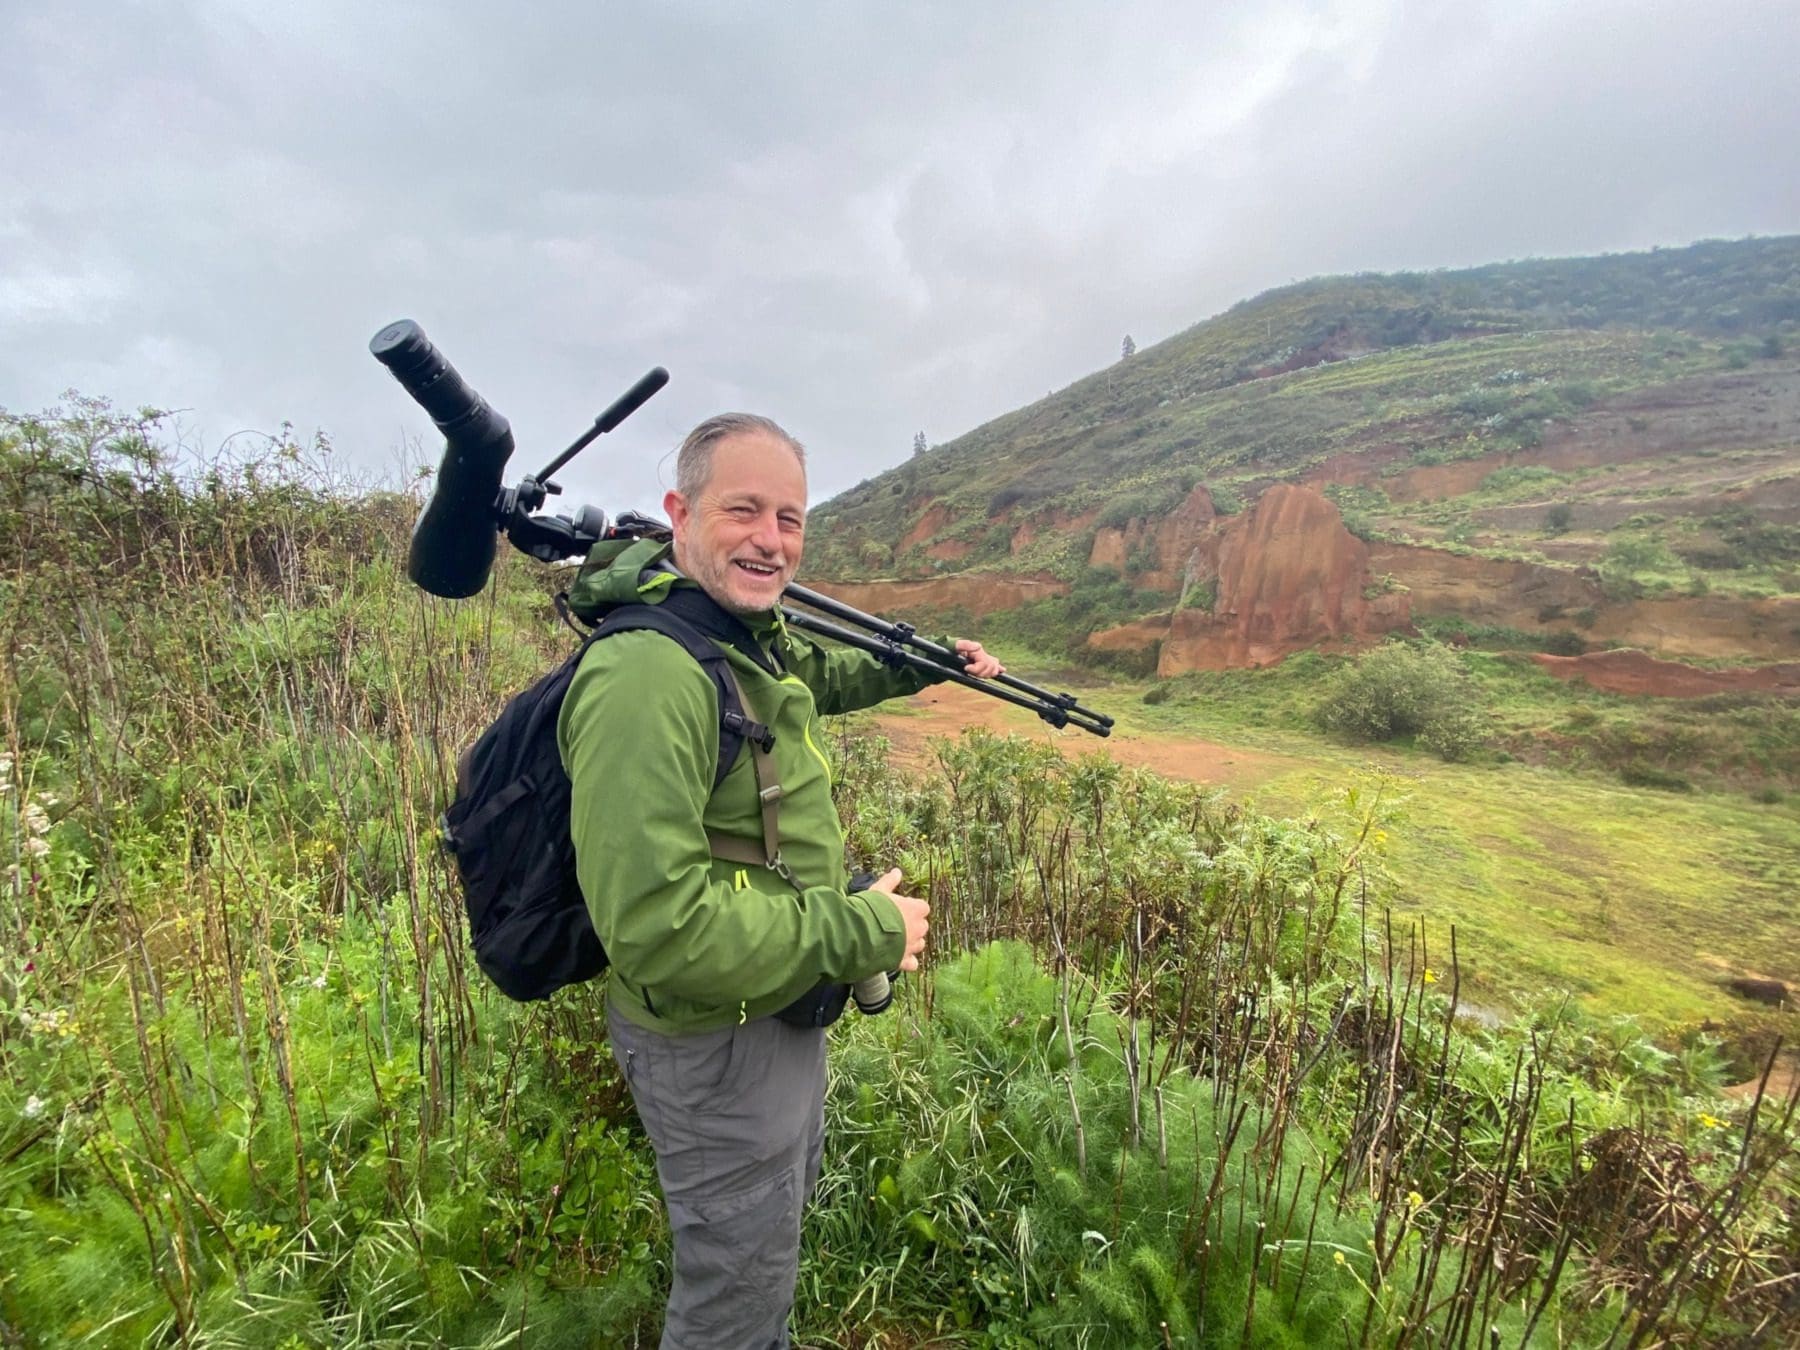 Jean-Guy on his Tenerife birdwatching tour